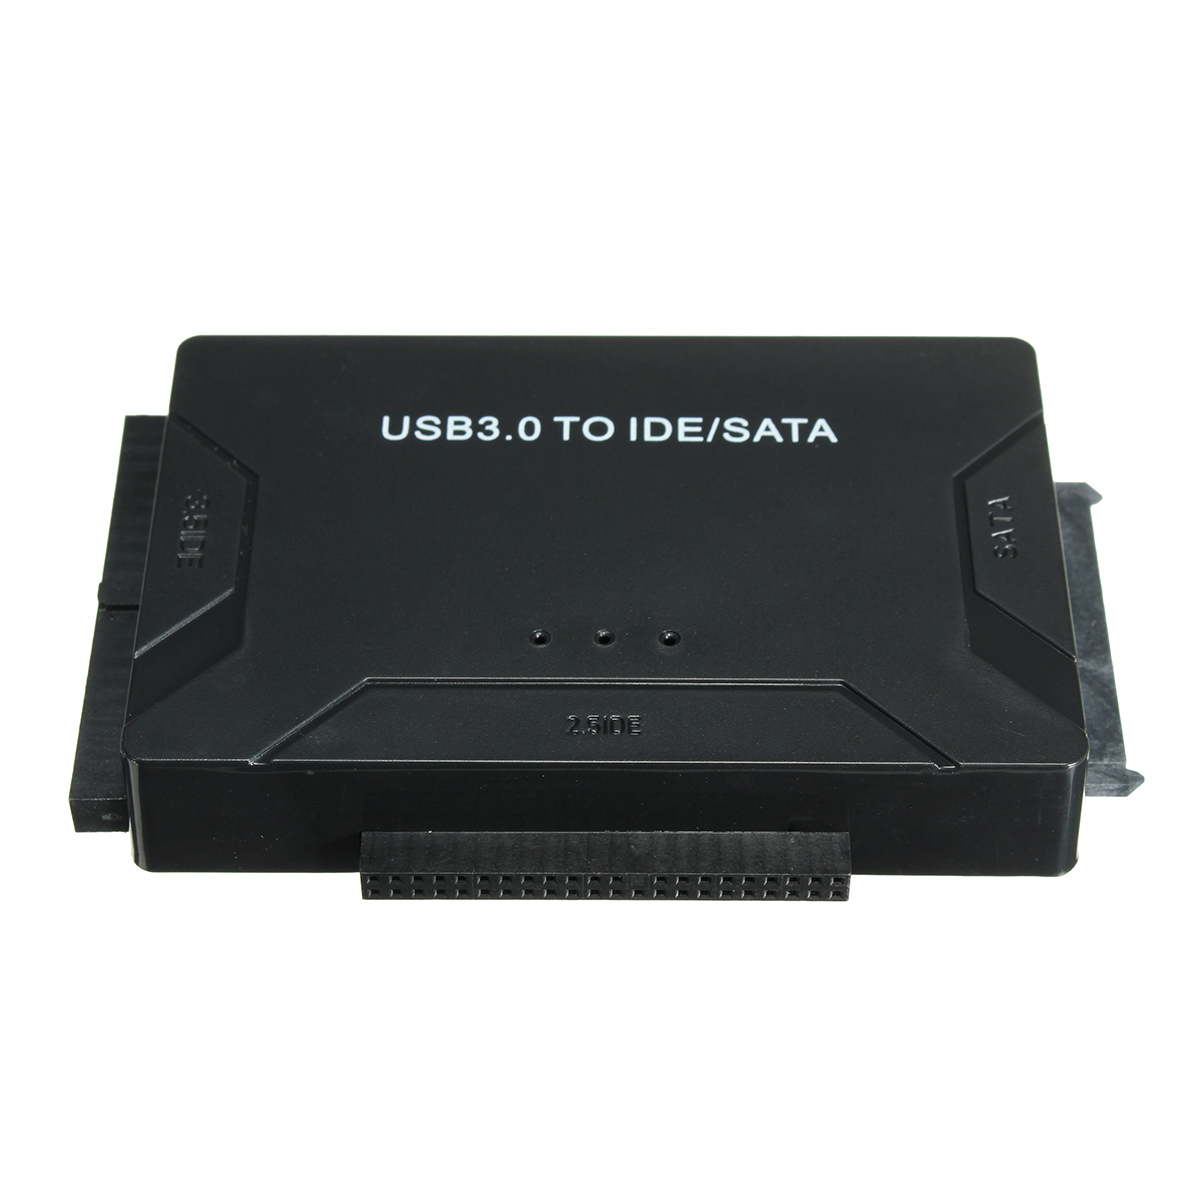 Pacific drive конвертер. SATA to USB Converter for 3.5-inch Drives. Адаптер ide, SATA 2.5" / 3.5" / на USB 3.0 адаптер жесткого диска. 2.5 Inch to 3.5 inch SSD HDD Adapter. Переходник Type c на под жесткий диск.